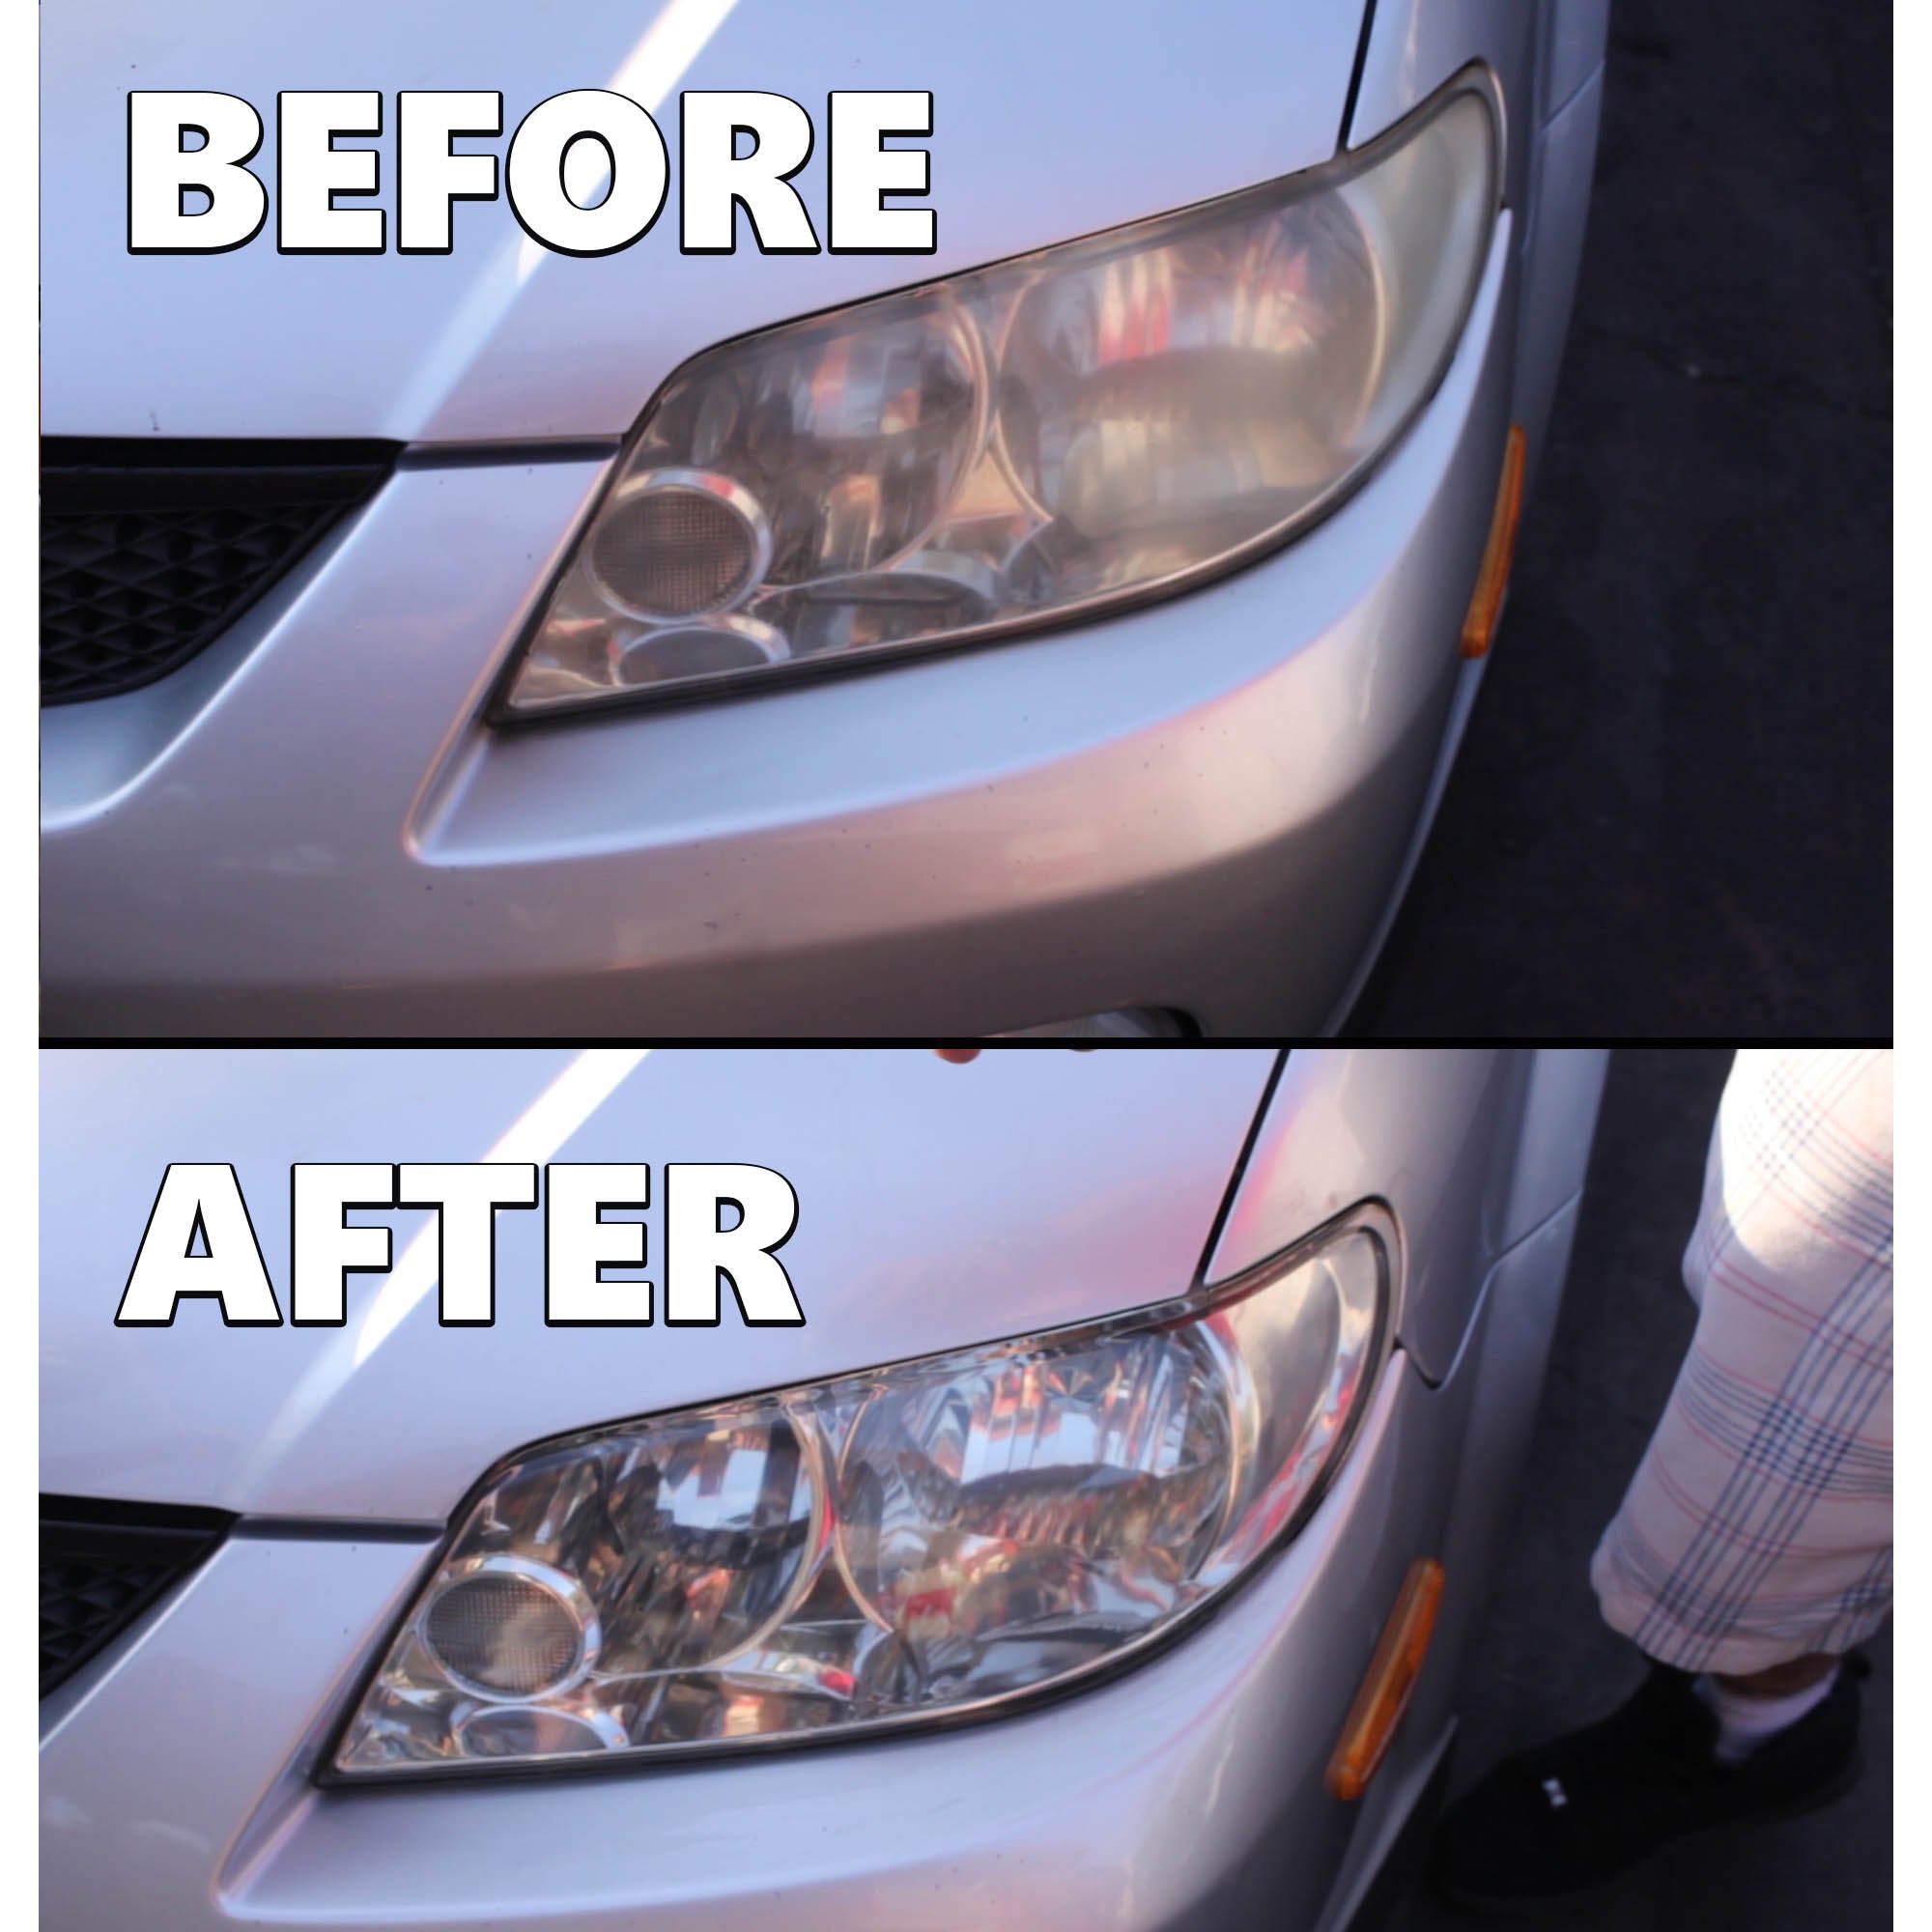 CLT Car Headlight Restoration Kit, Headlight Restorer Wipes (3)